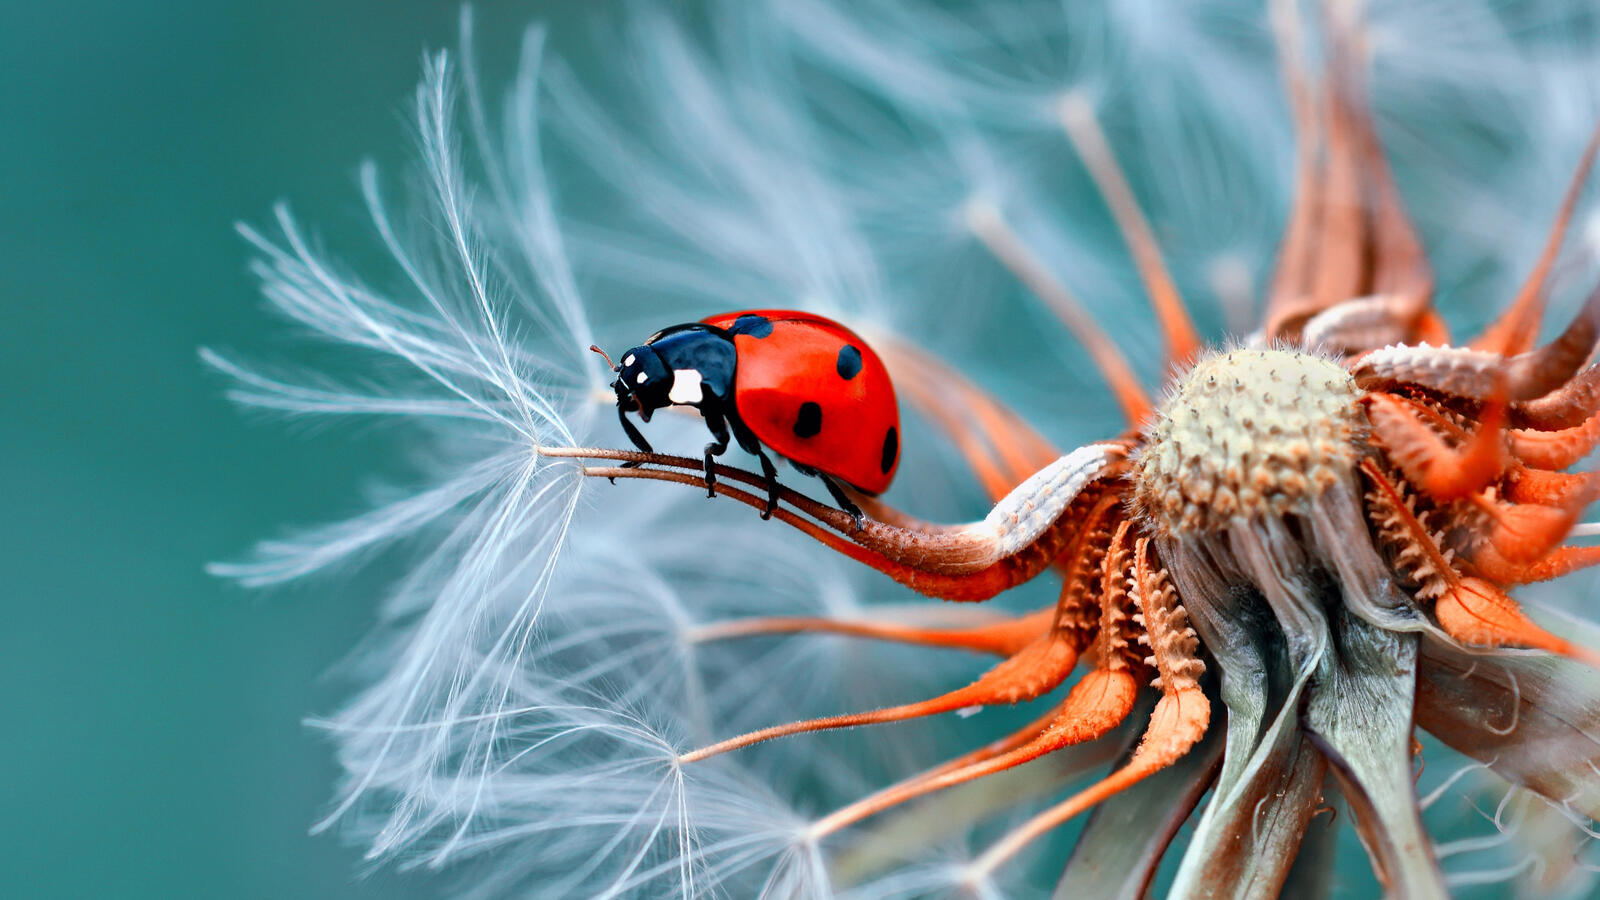 Wallpapers wallpaper ladybug dandelion macro on the desktop